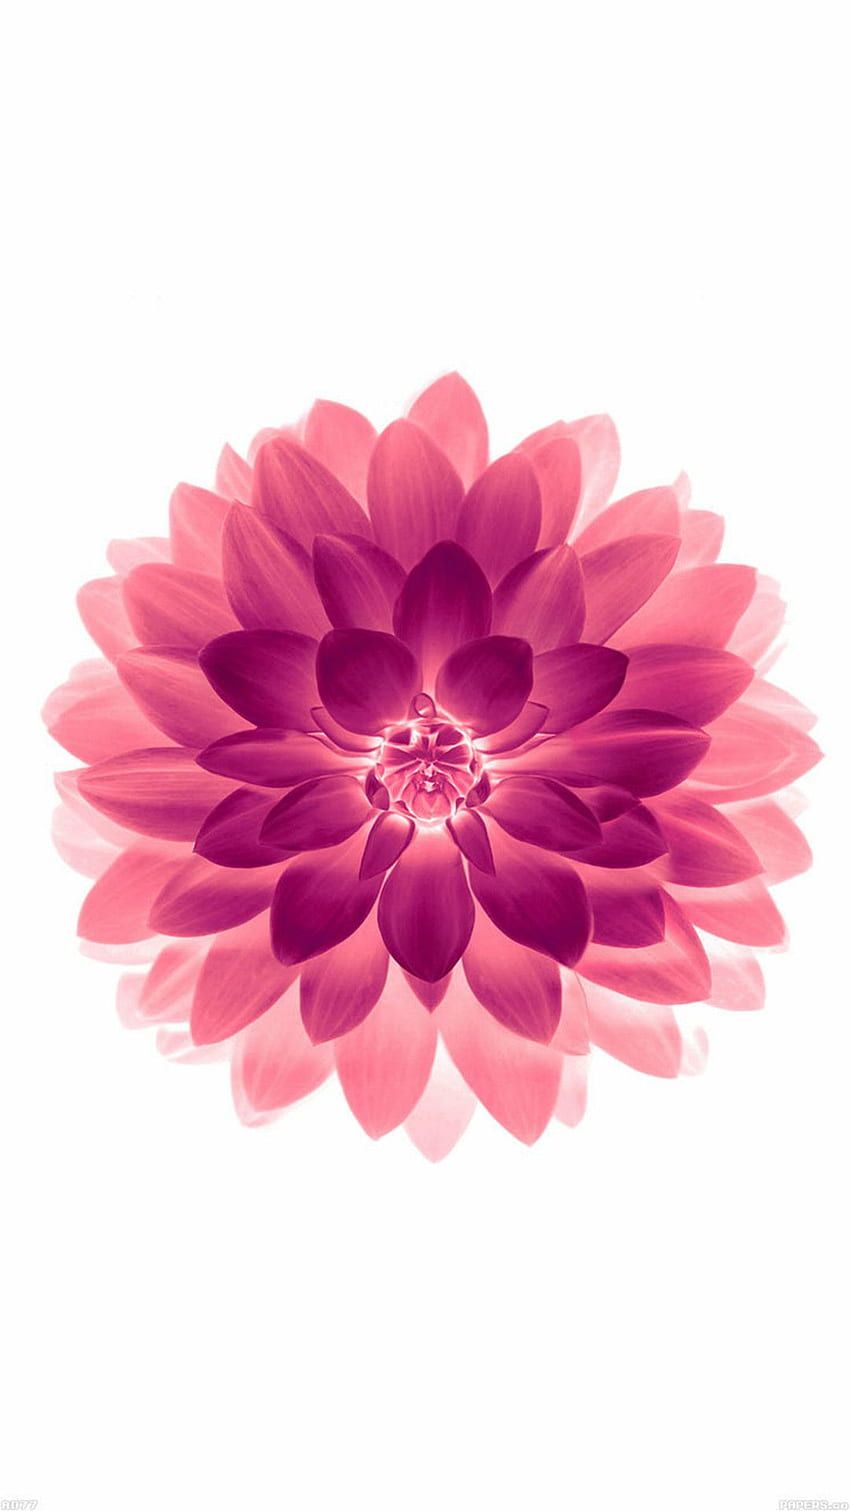  Blume Des Lebens Hintergrundbild 850x1511. Rosa Blume IPhone, Blume Des Lebens IPhone HD Handy Hintergrundbild